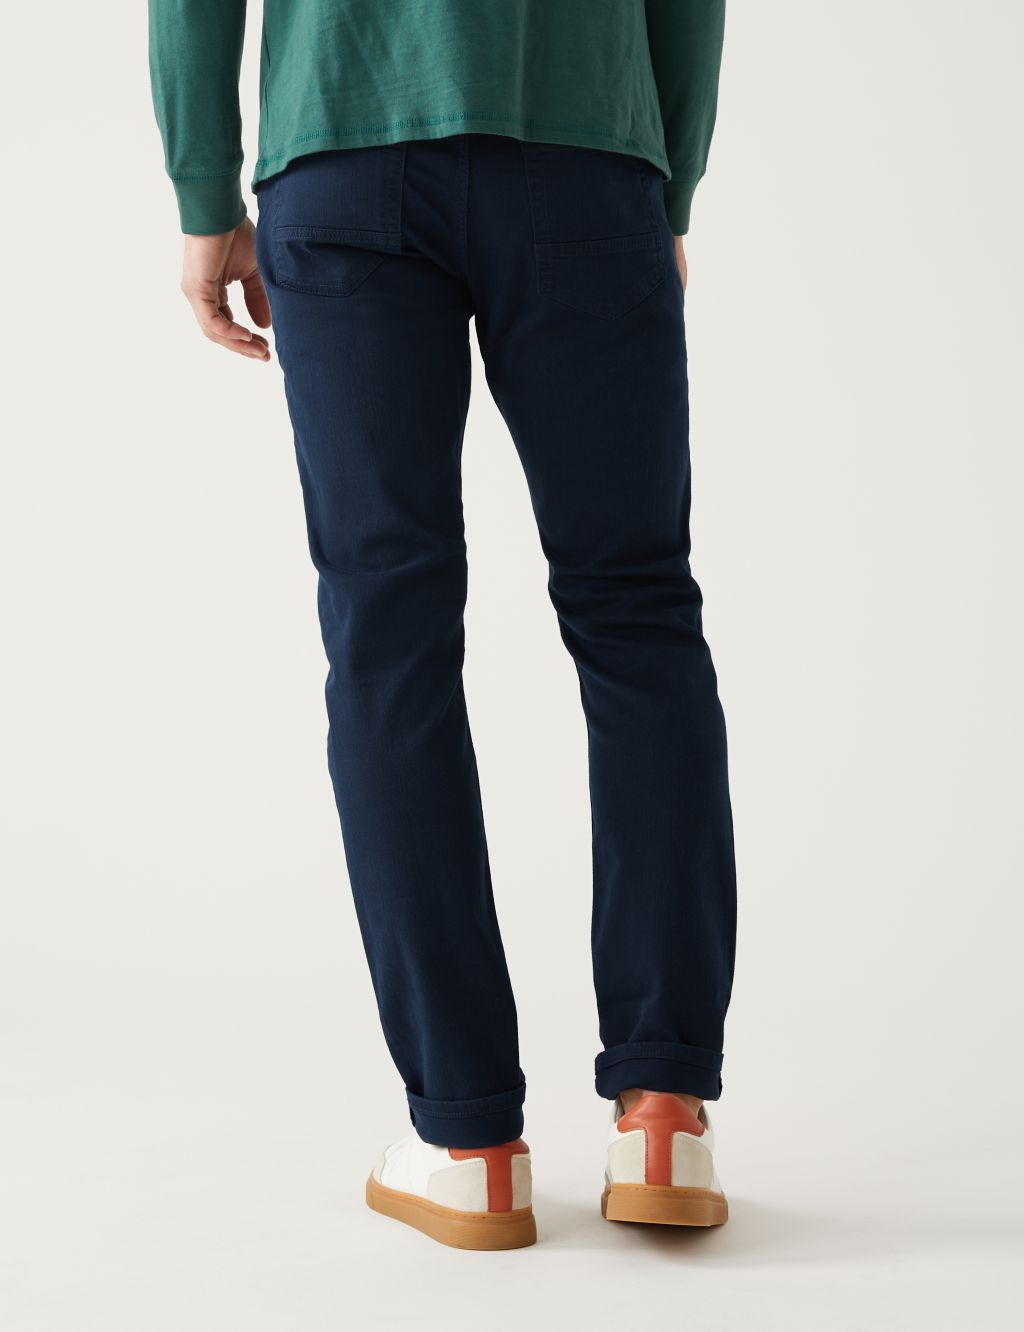 Shorter Length Slim Fit 360 Flex Jeans image 3